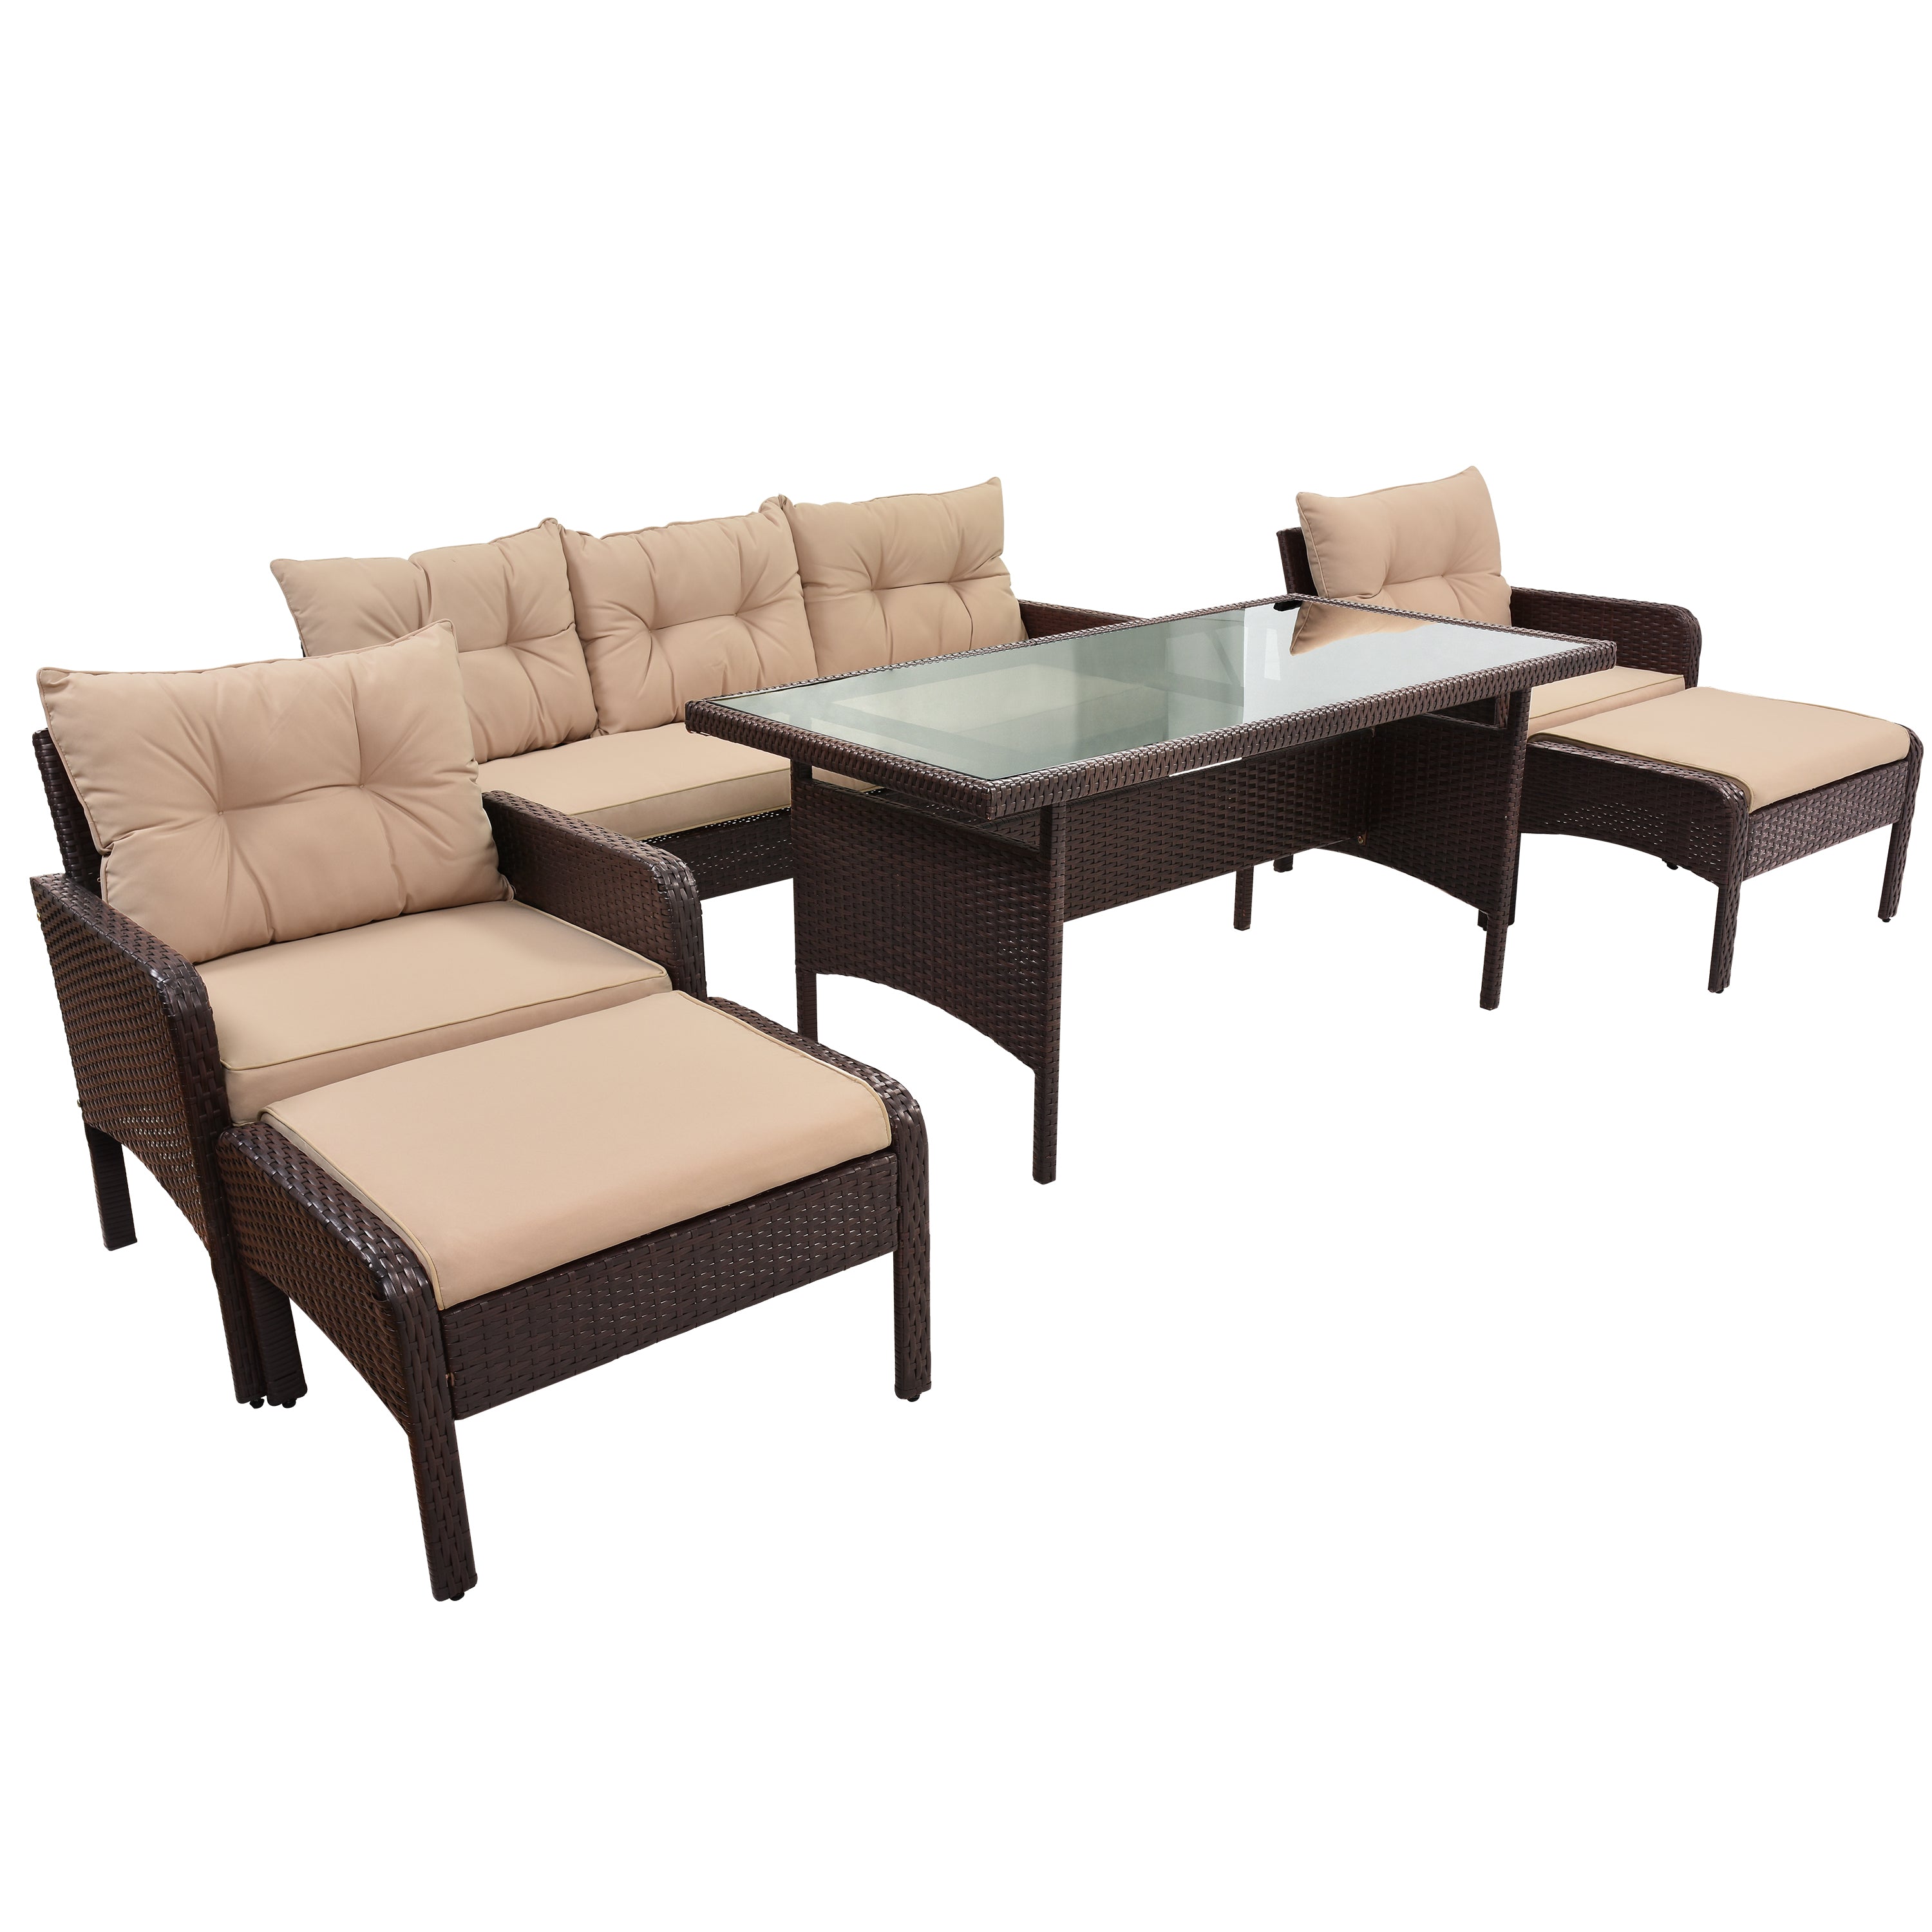 6-Piece Outdoor Patio PE Wicker Rattan Sofa Set with Cushions and Tea Table,Brown Wicker+Light Coffee Cushion-Boyel Living